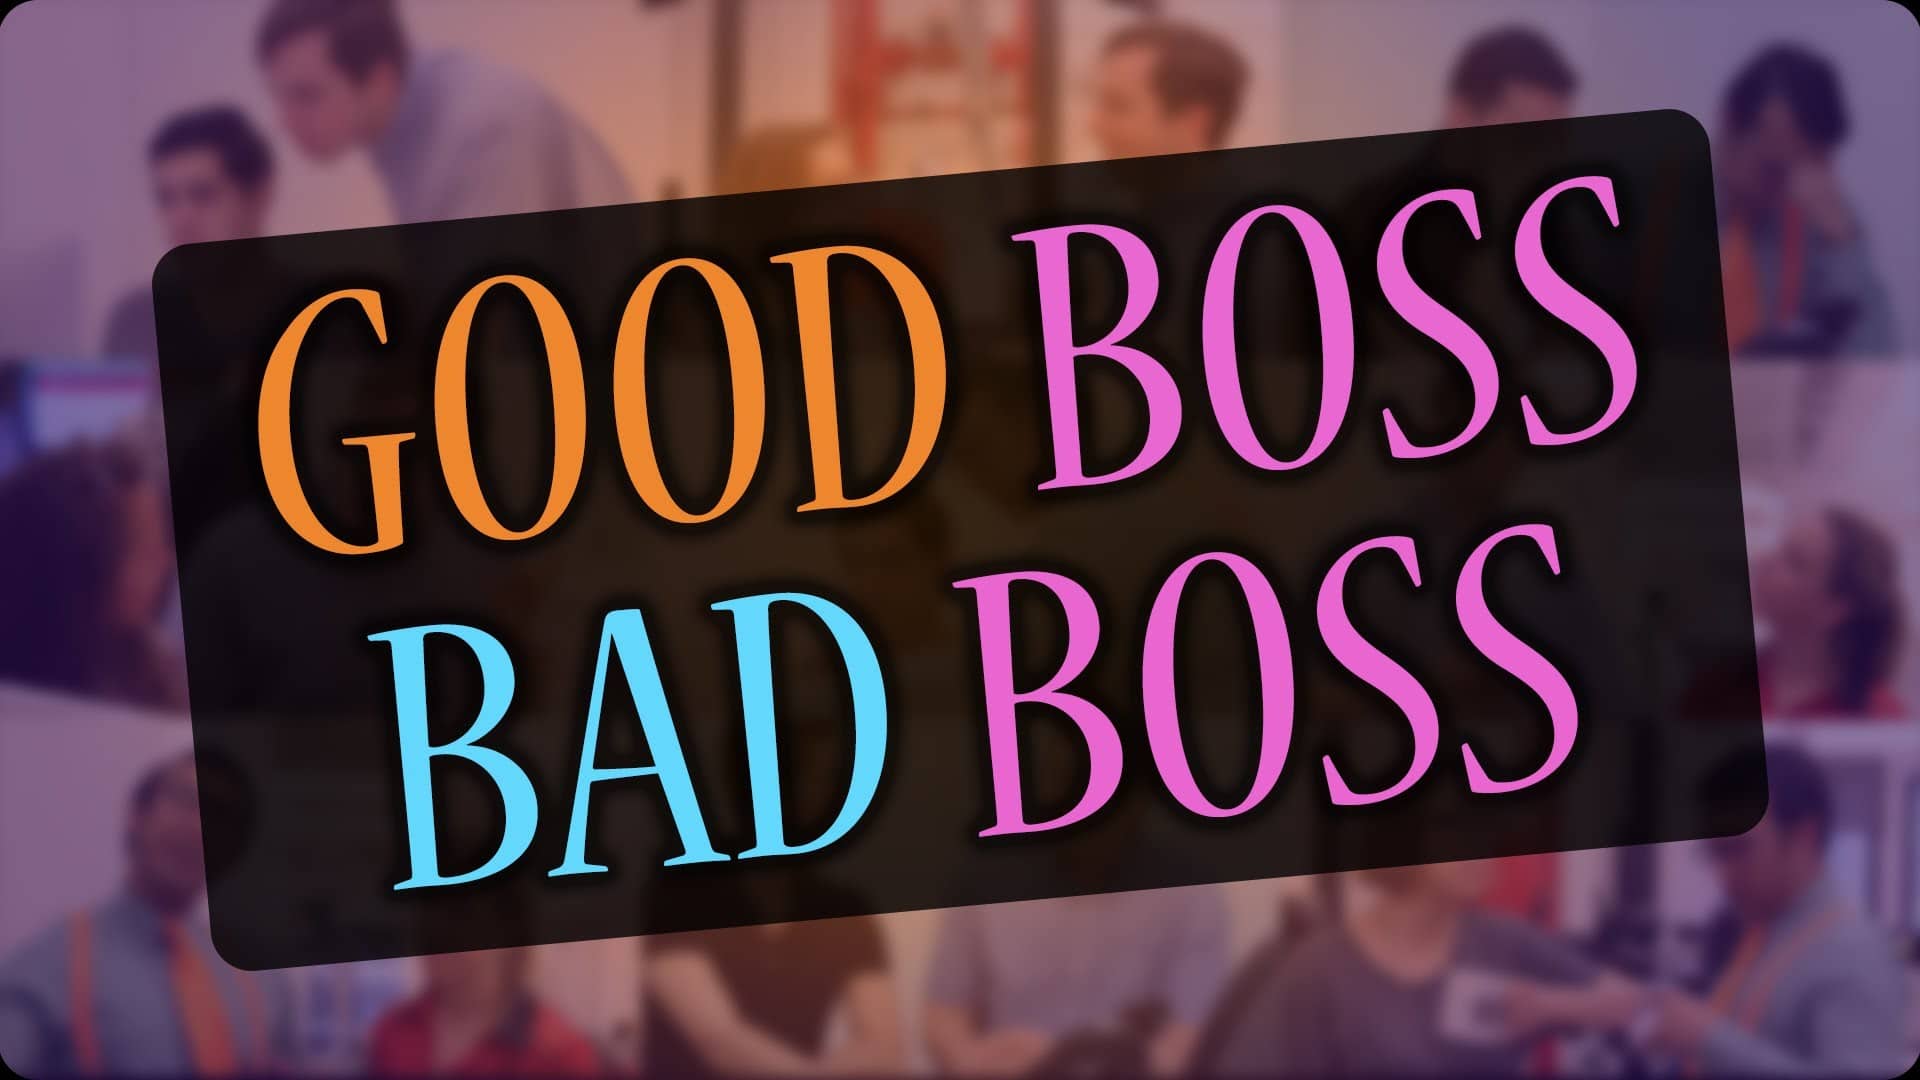 good and bad boss traits